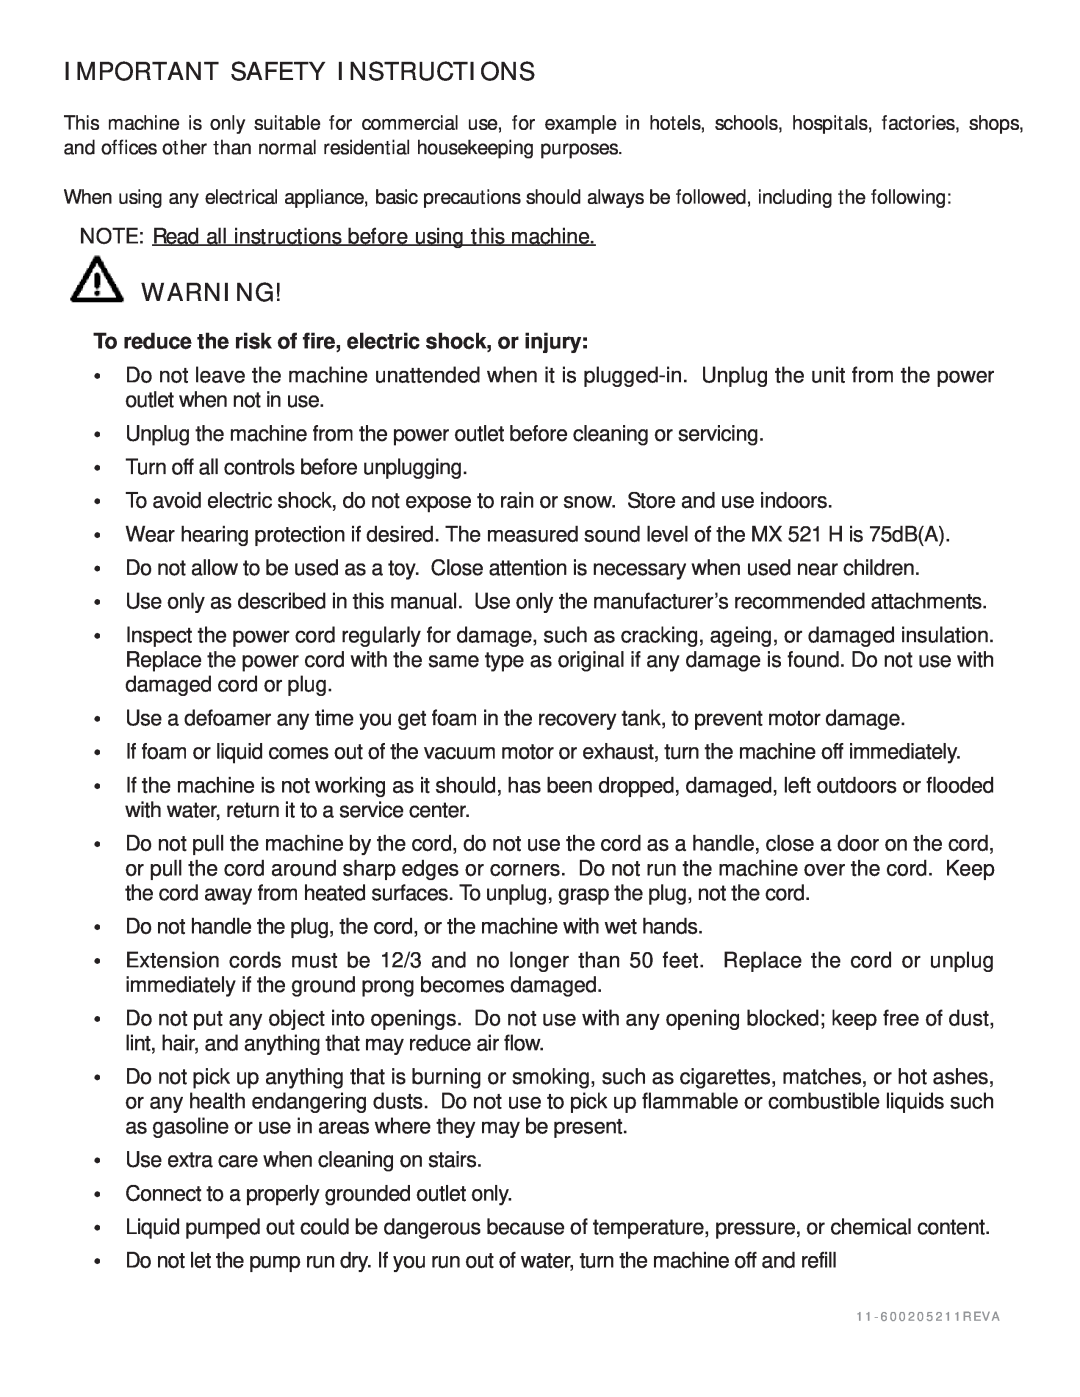 Nilfisk-ALTO MX 521 H manual Important Safety Instructions 